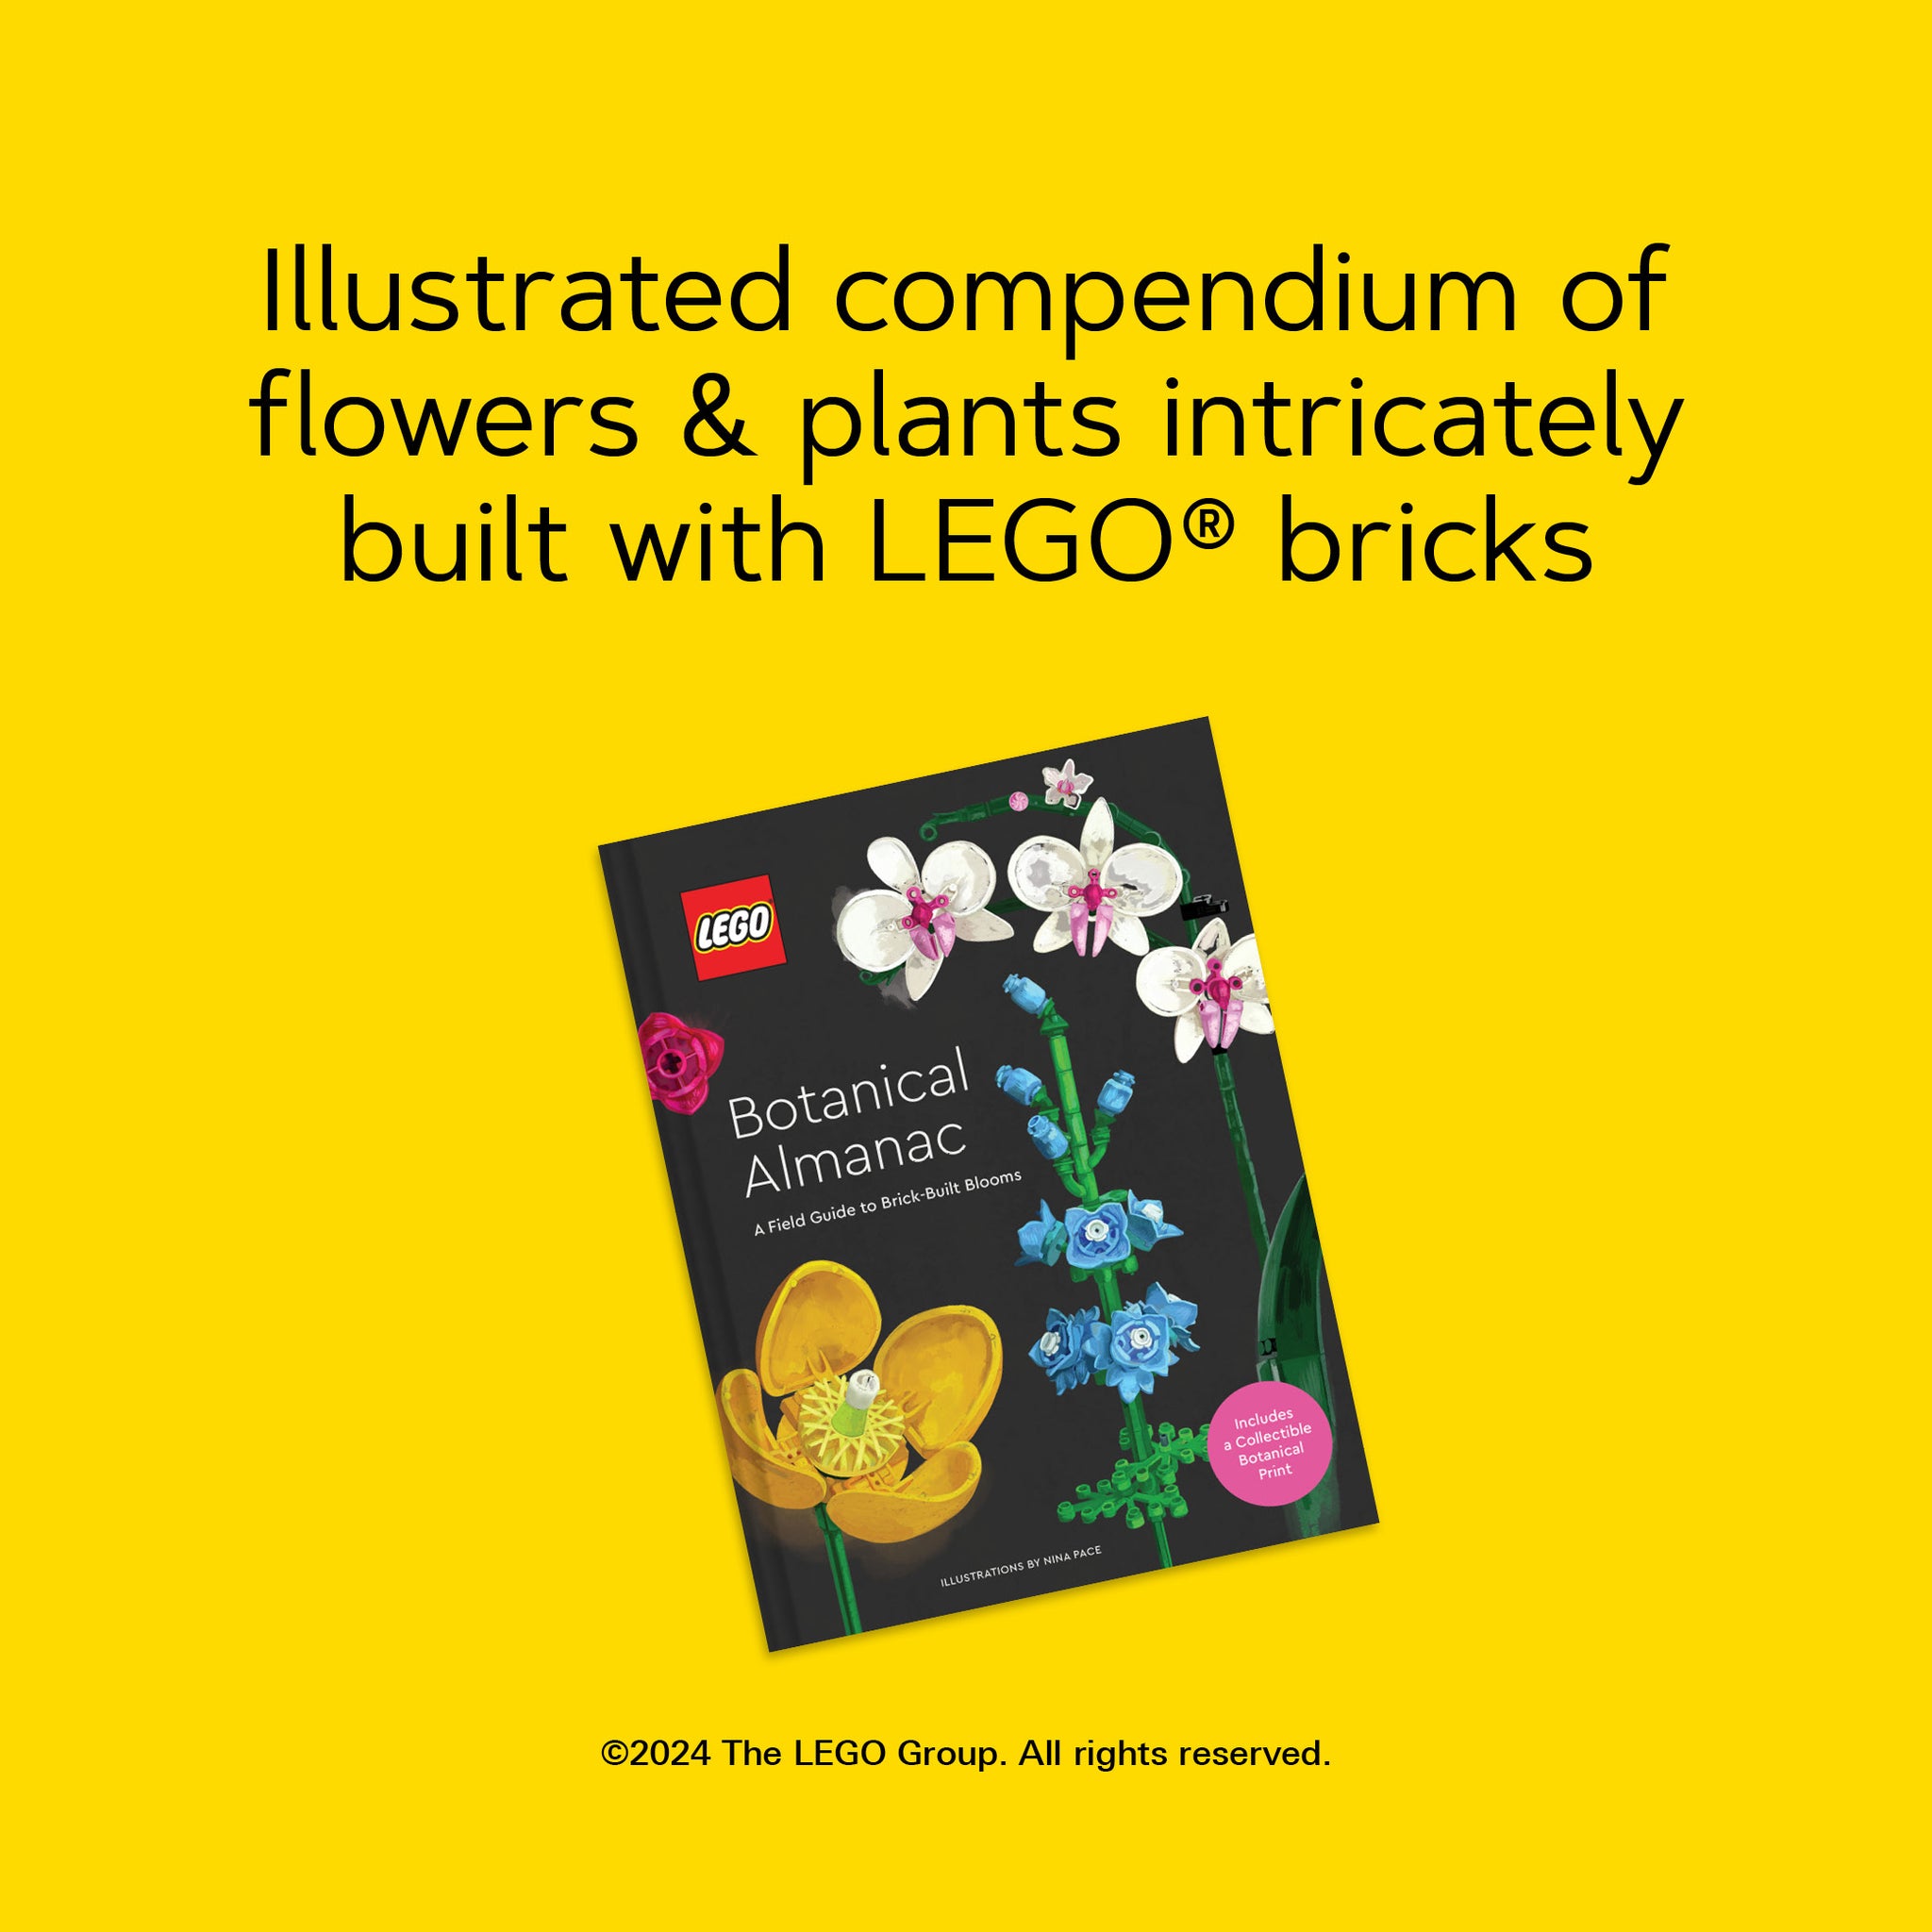 LEGO Botanical Almanac